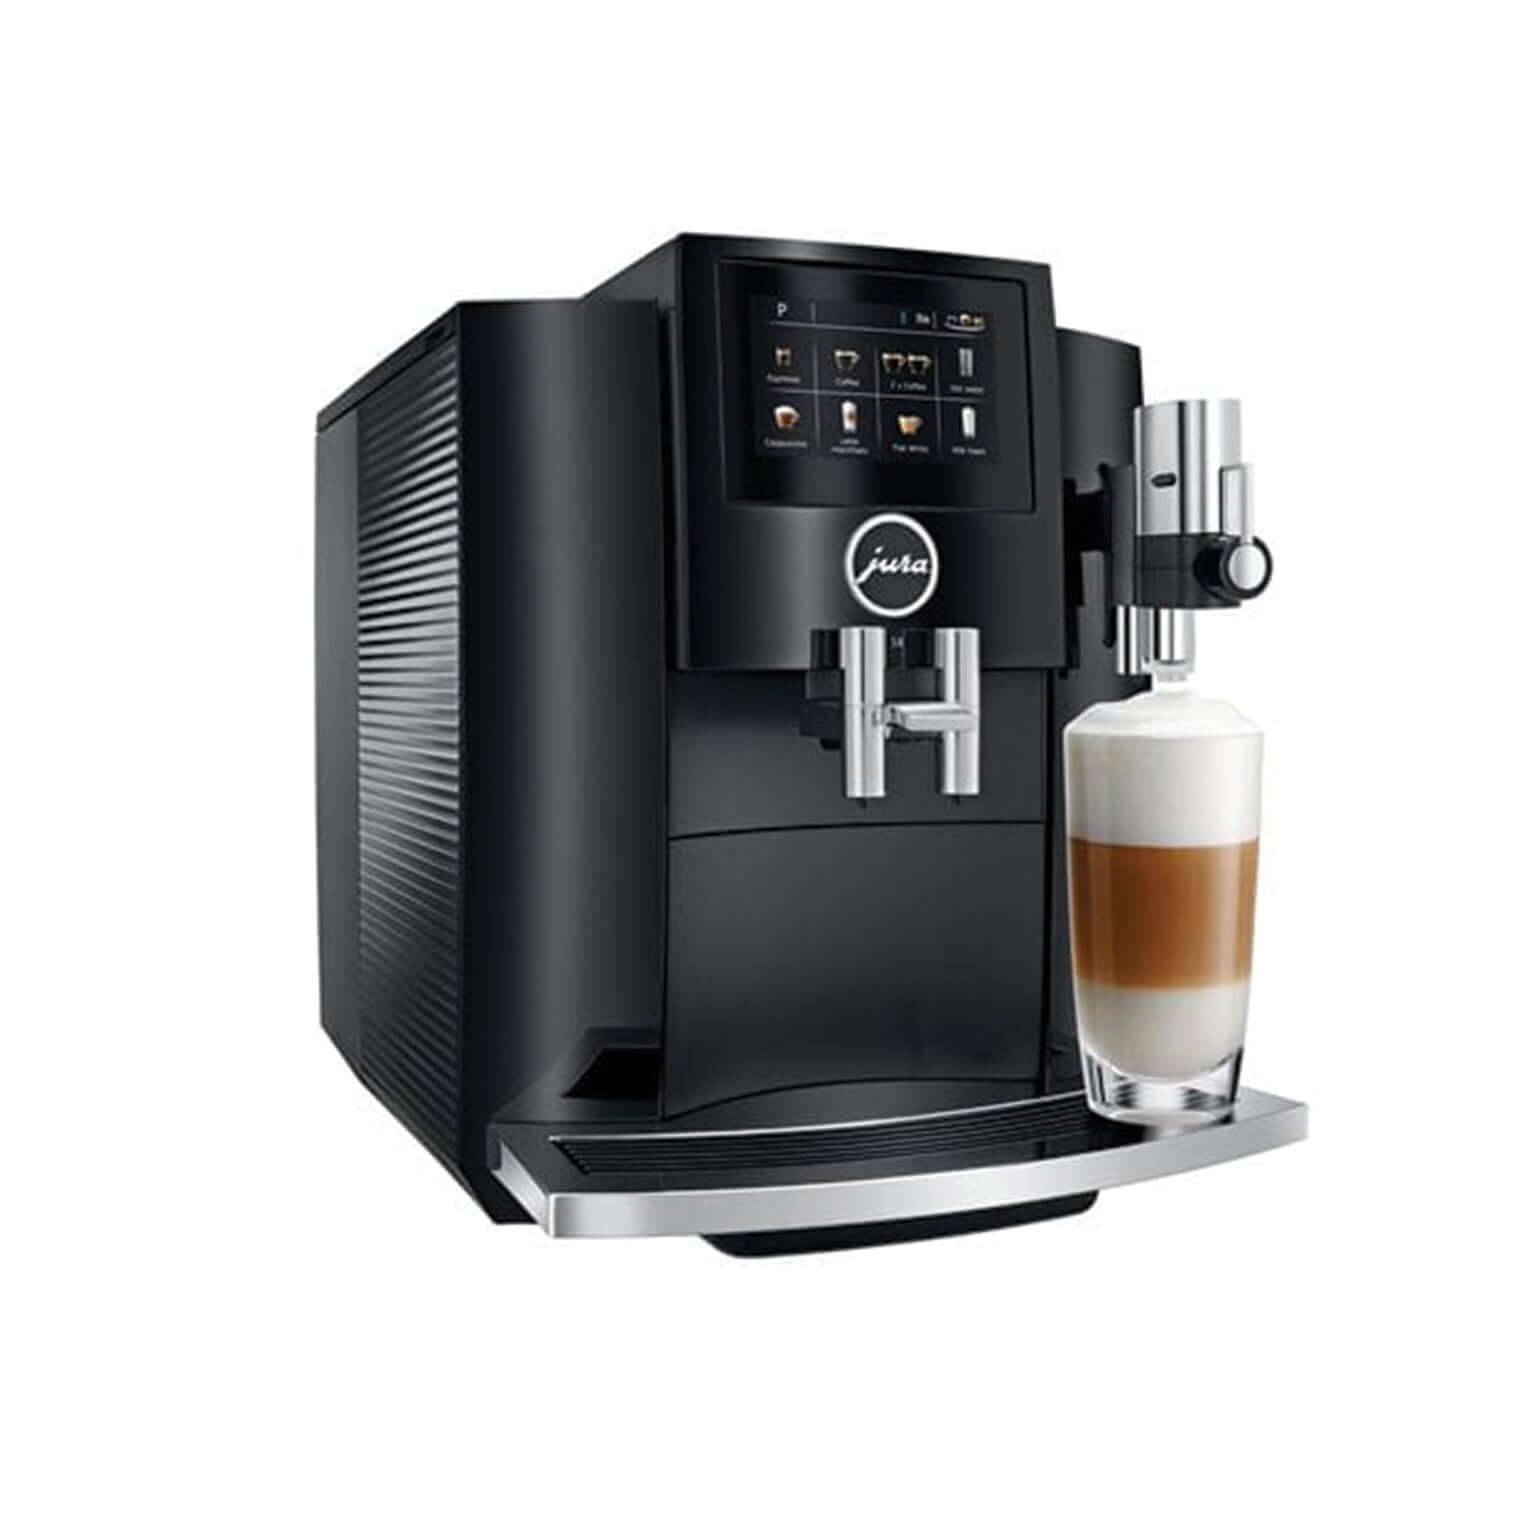 Jura Espresso Machine - S8